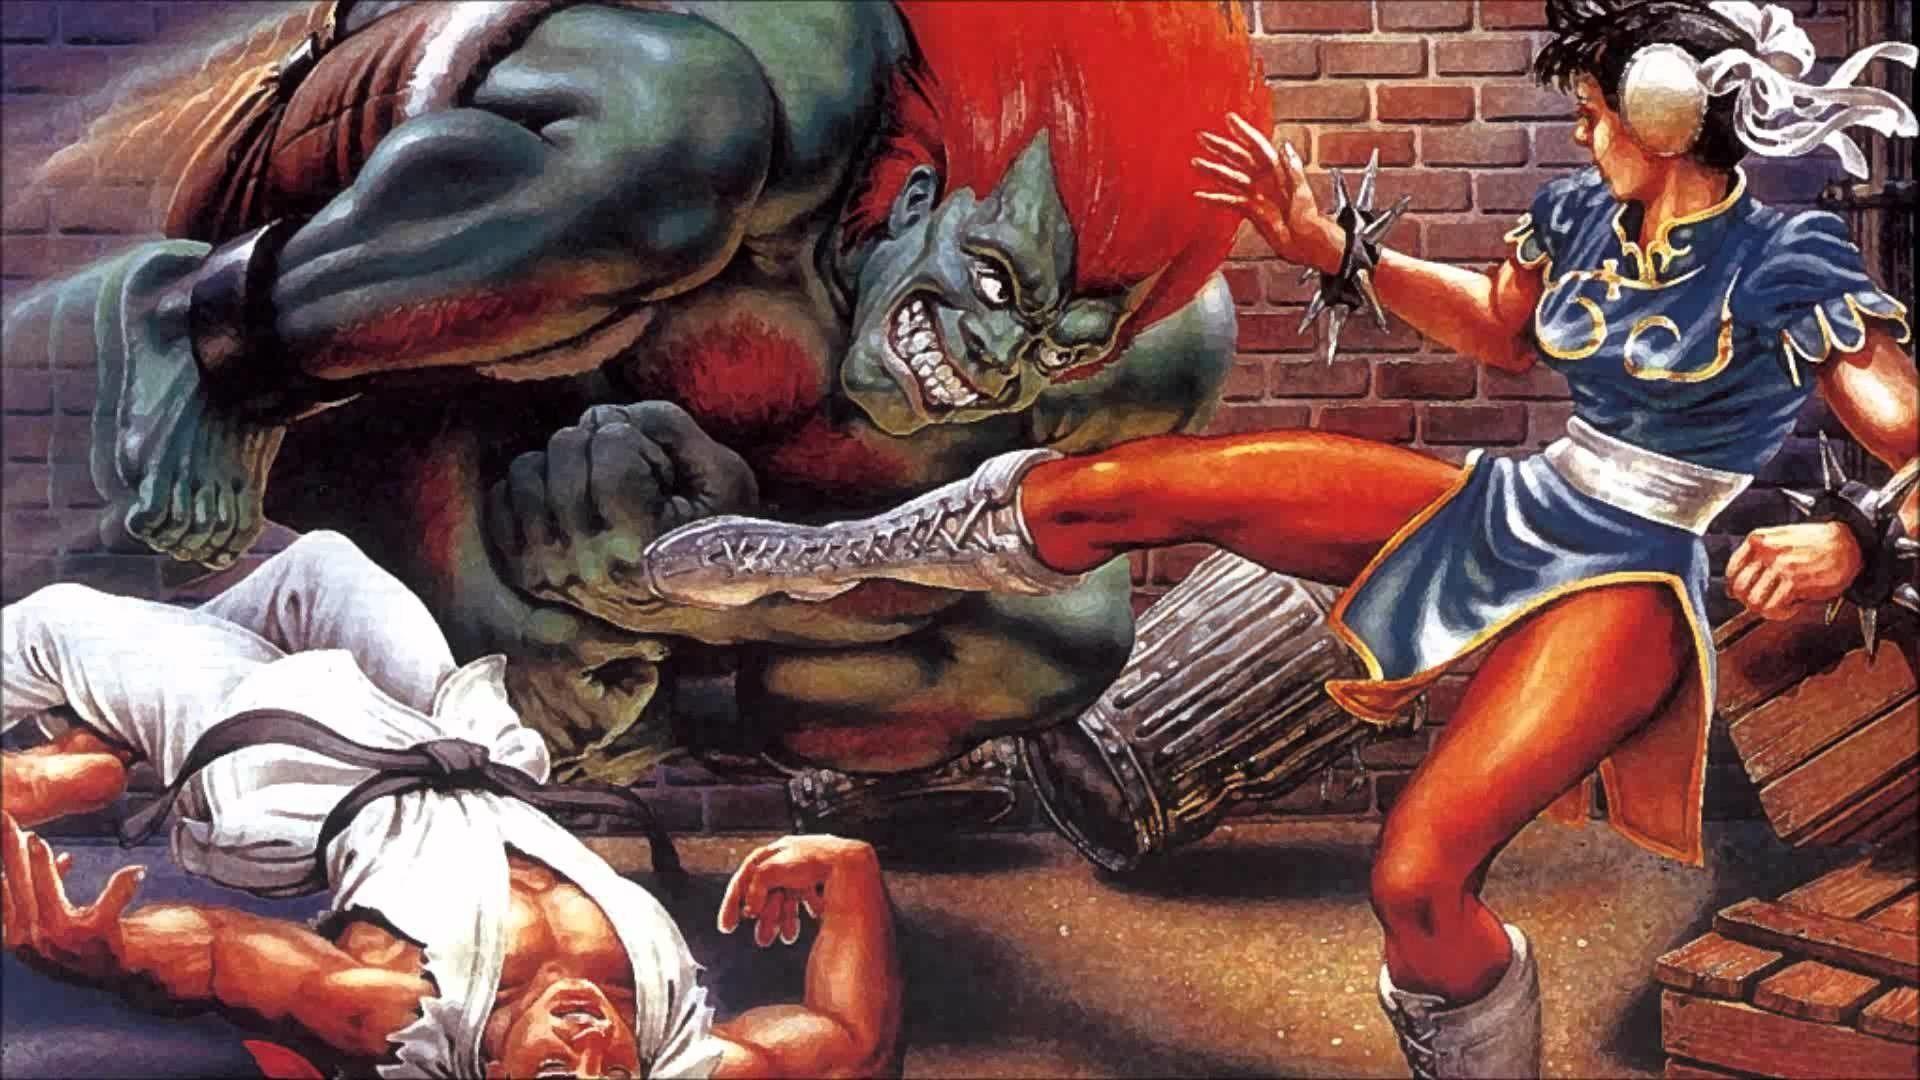 Cover art for Street Fighter II.